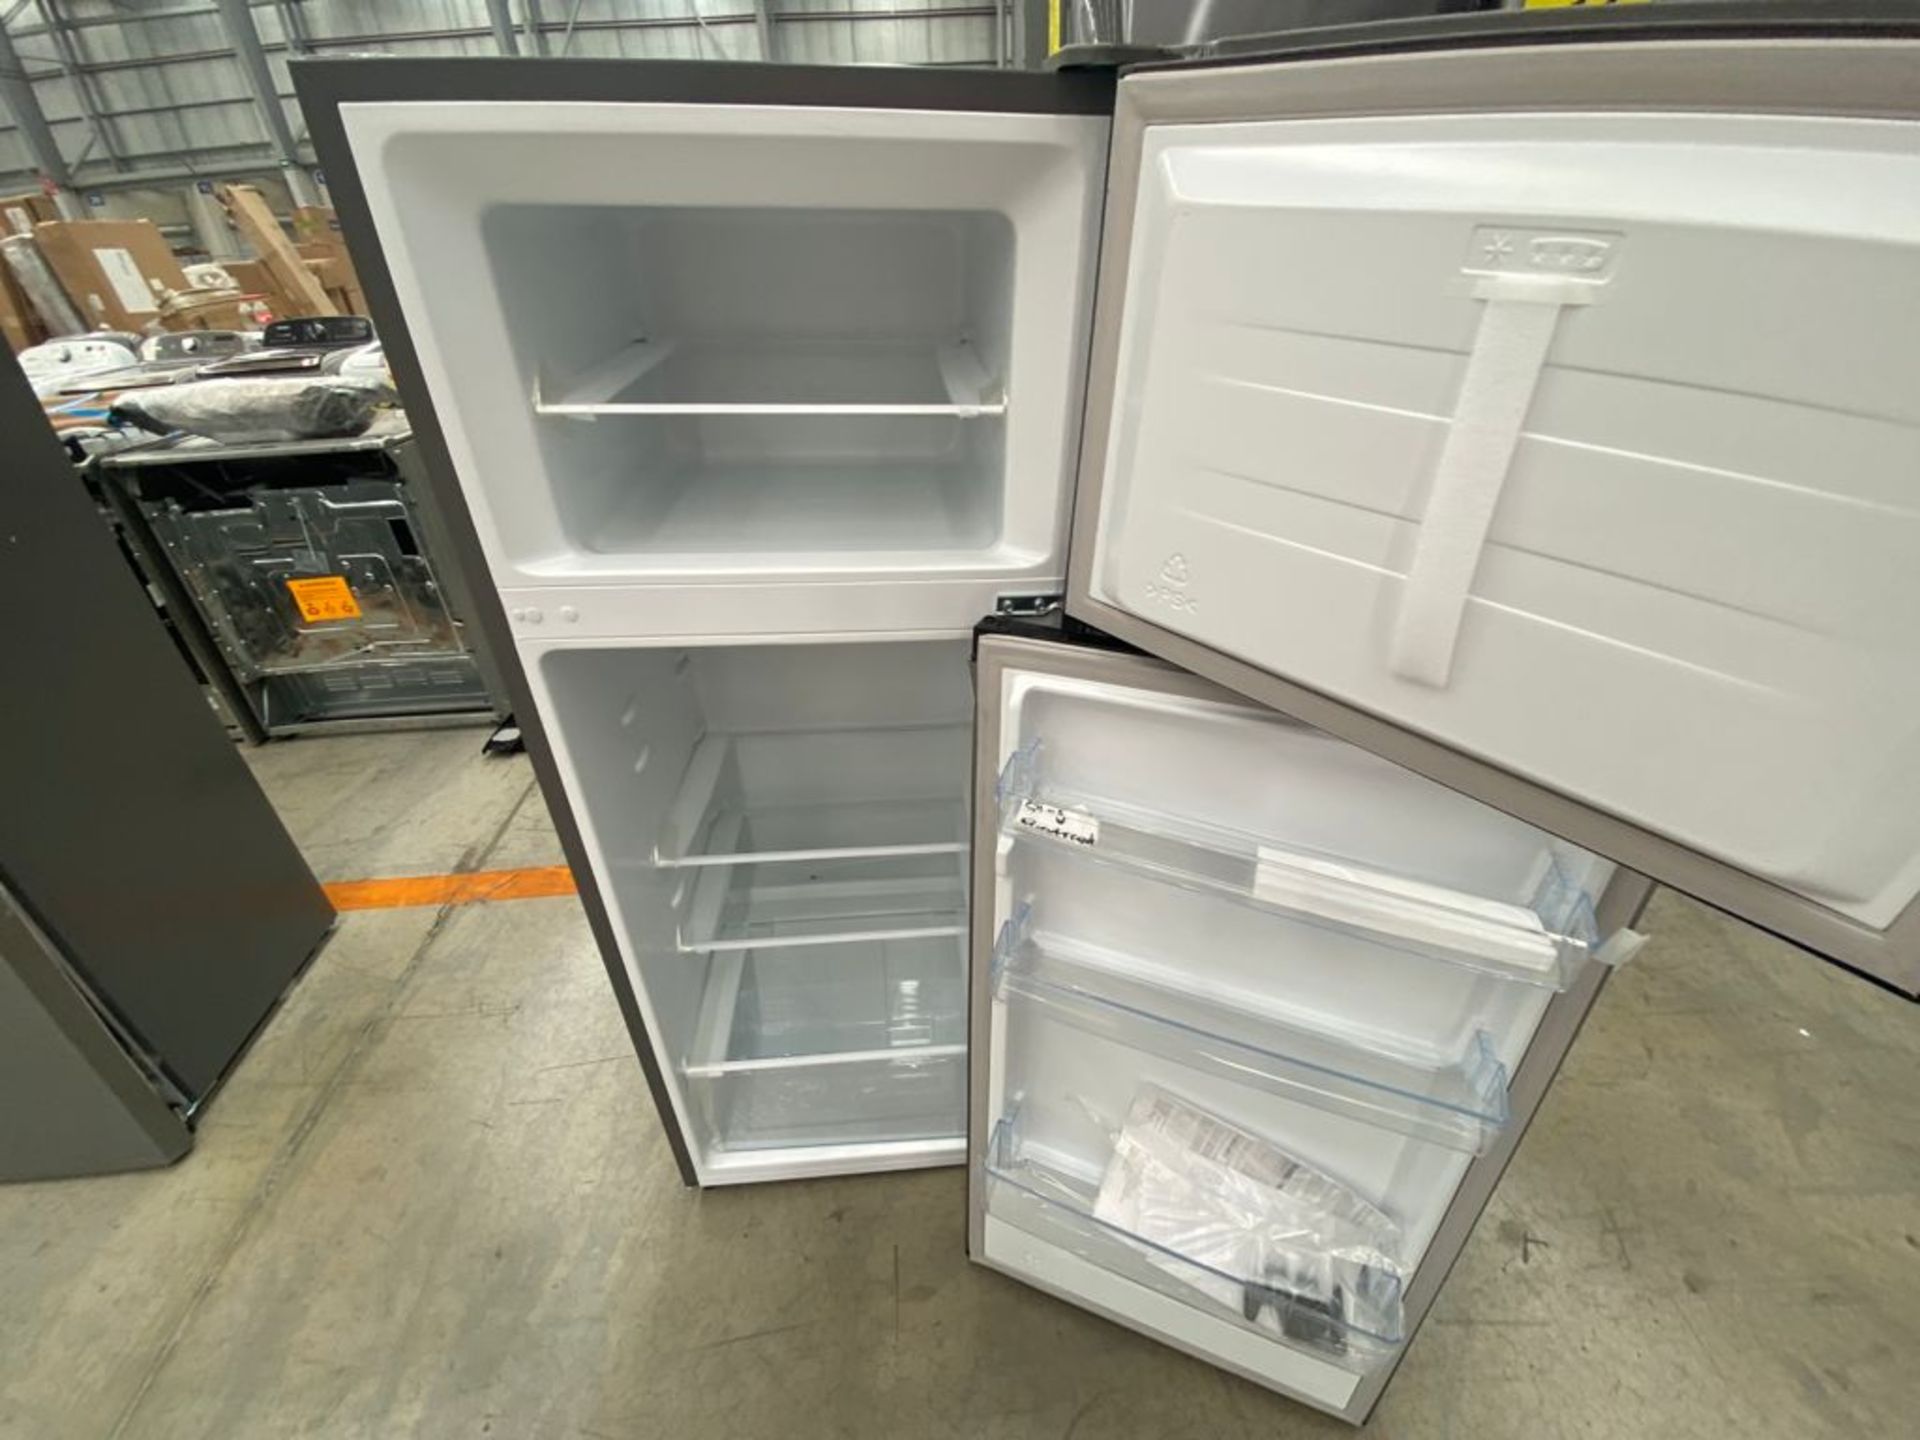 2 Refrigeradores marca Hisense color gris modelo RT80D6AWX - Image 21 of 28